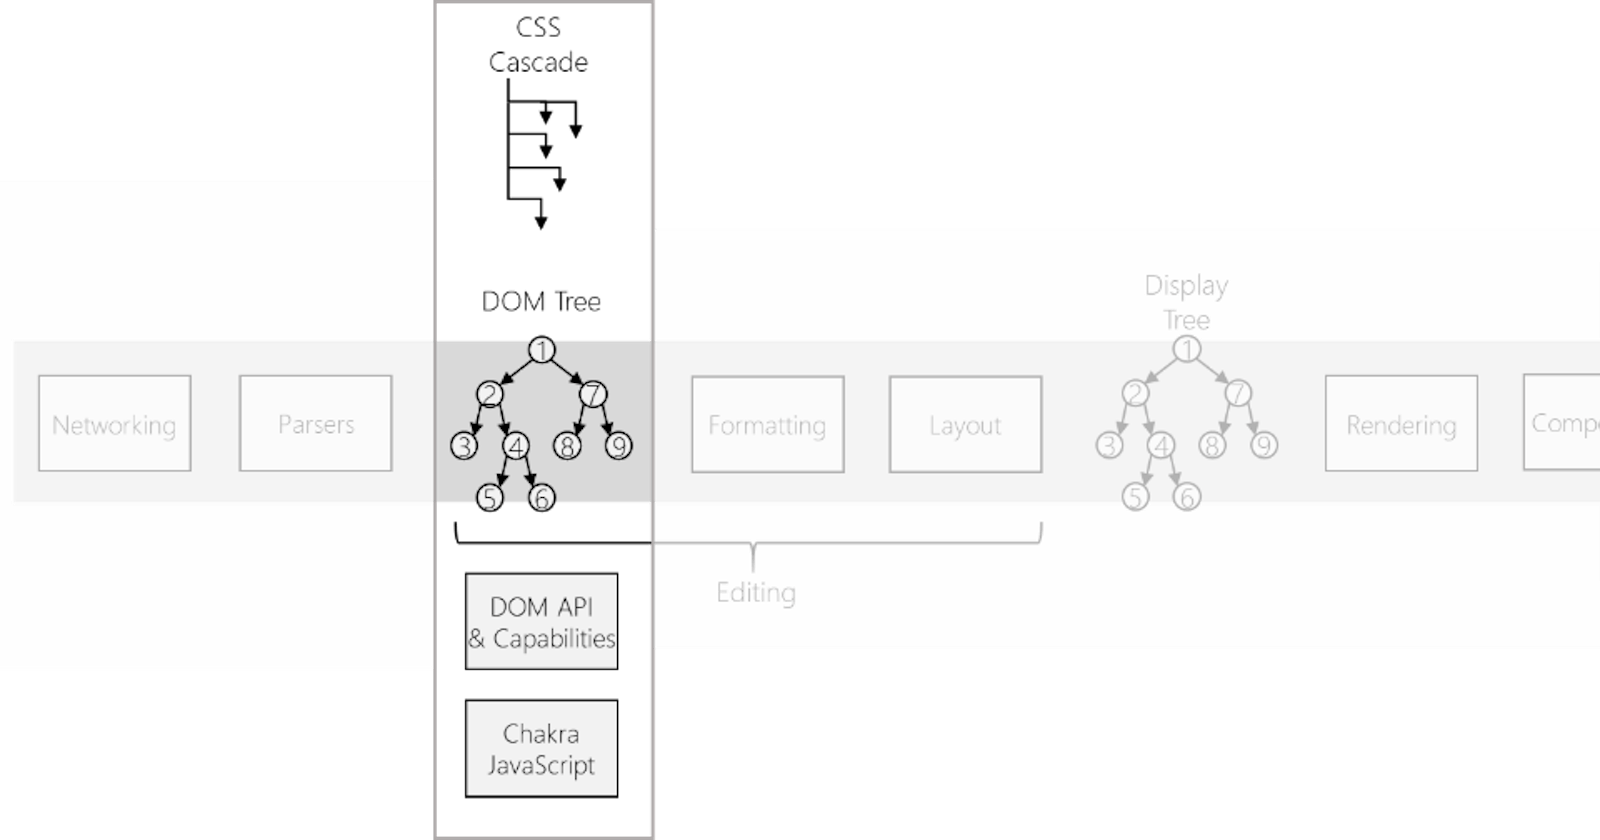 Modernizing the DOM tree in Microsoft Edge